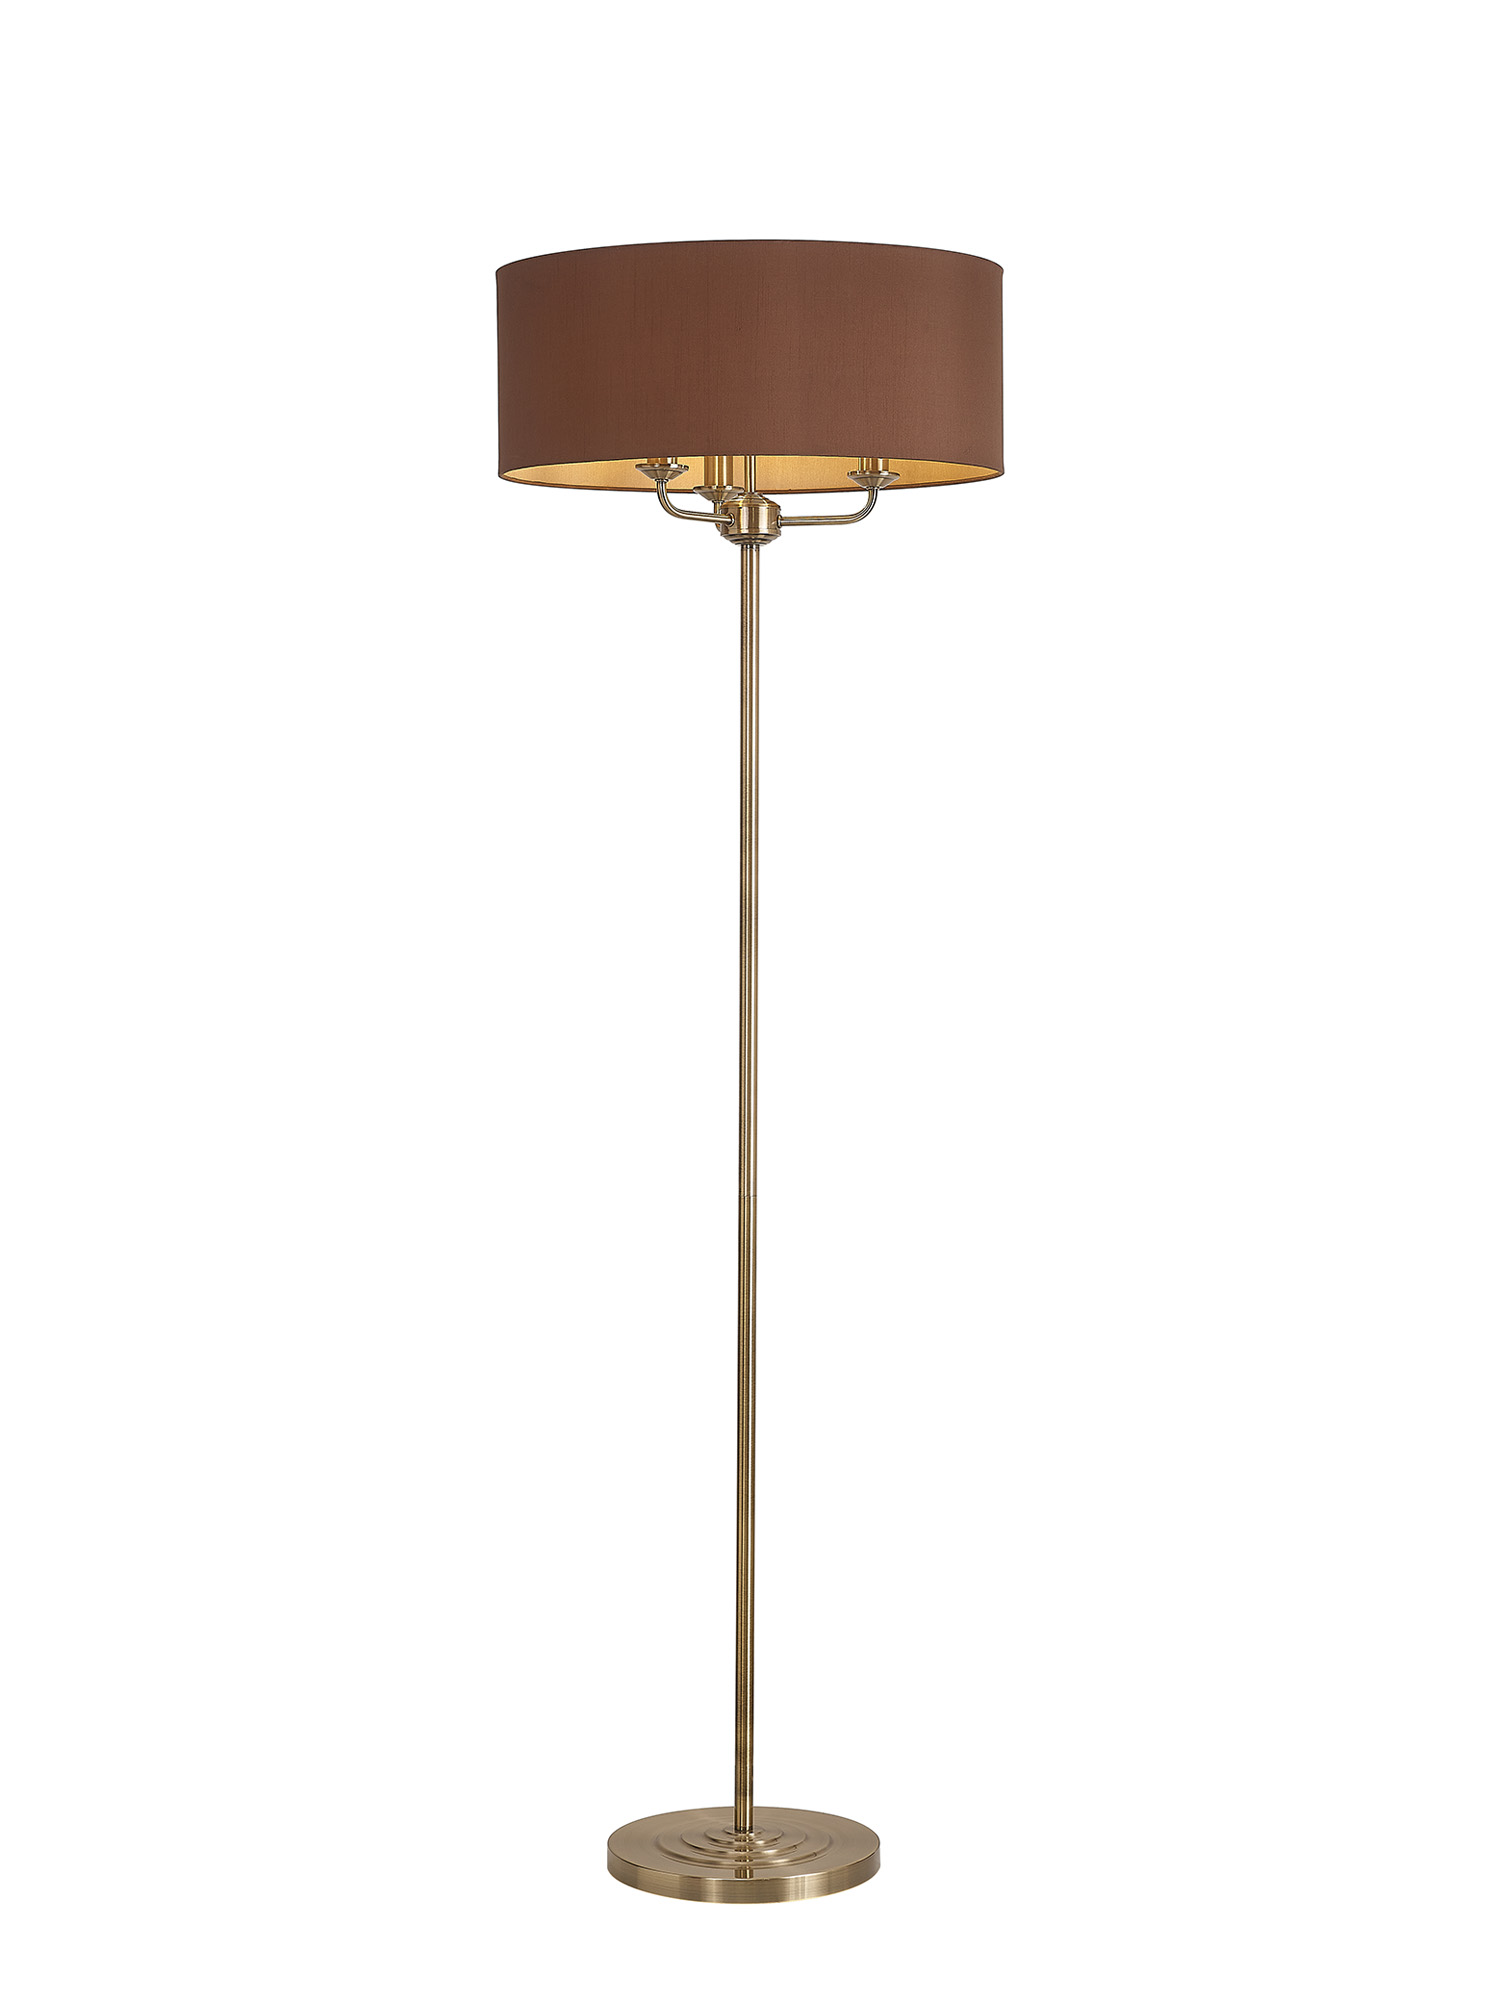 DK0917  Banyan 45cm 3 Light Floor Lamp Antique Brass, Raw Cocoa